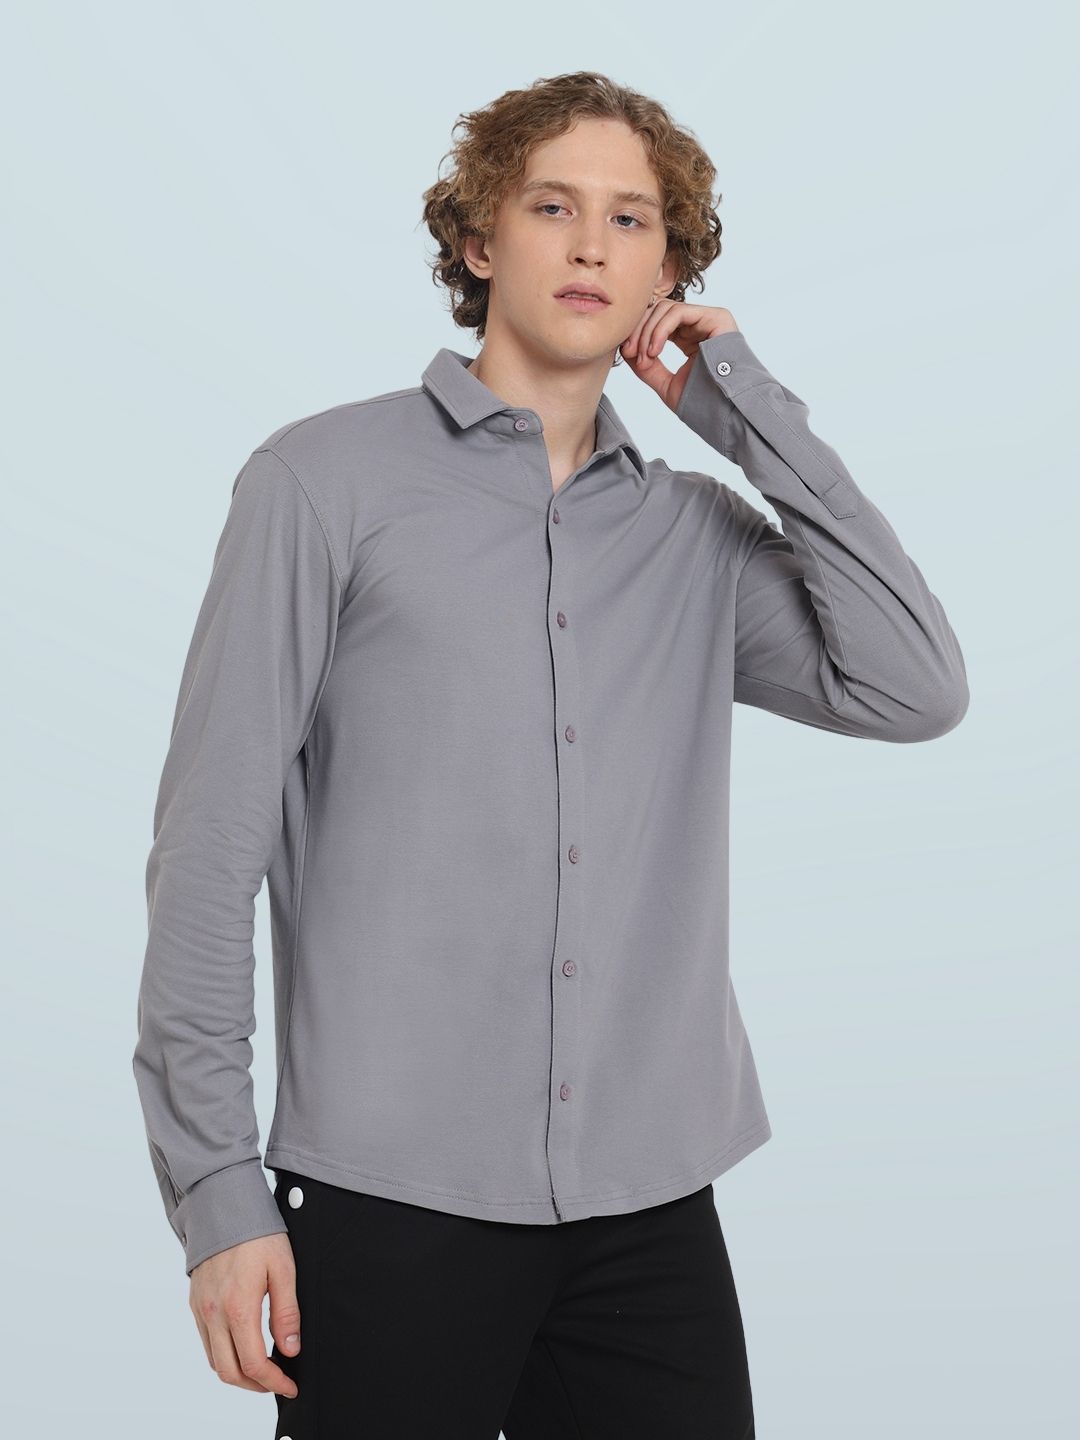 Silver Grey Sporty Pique Shirt - Wearduds